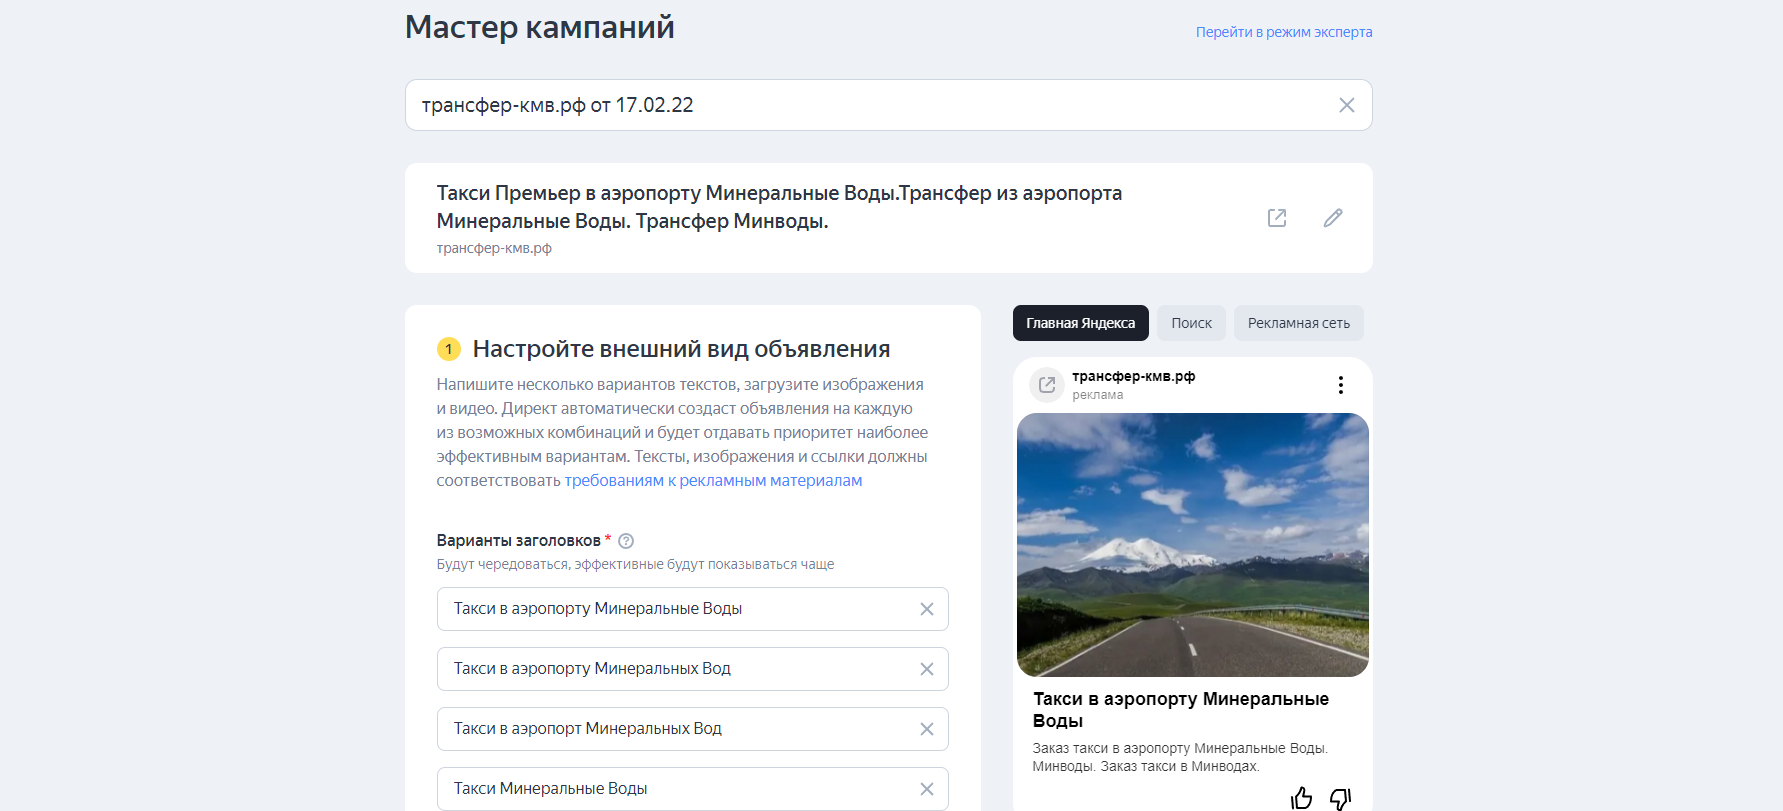 Интерфейс «Мастера кампаний» в Яндекс.Директе.